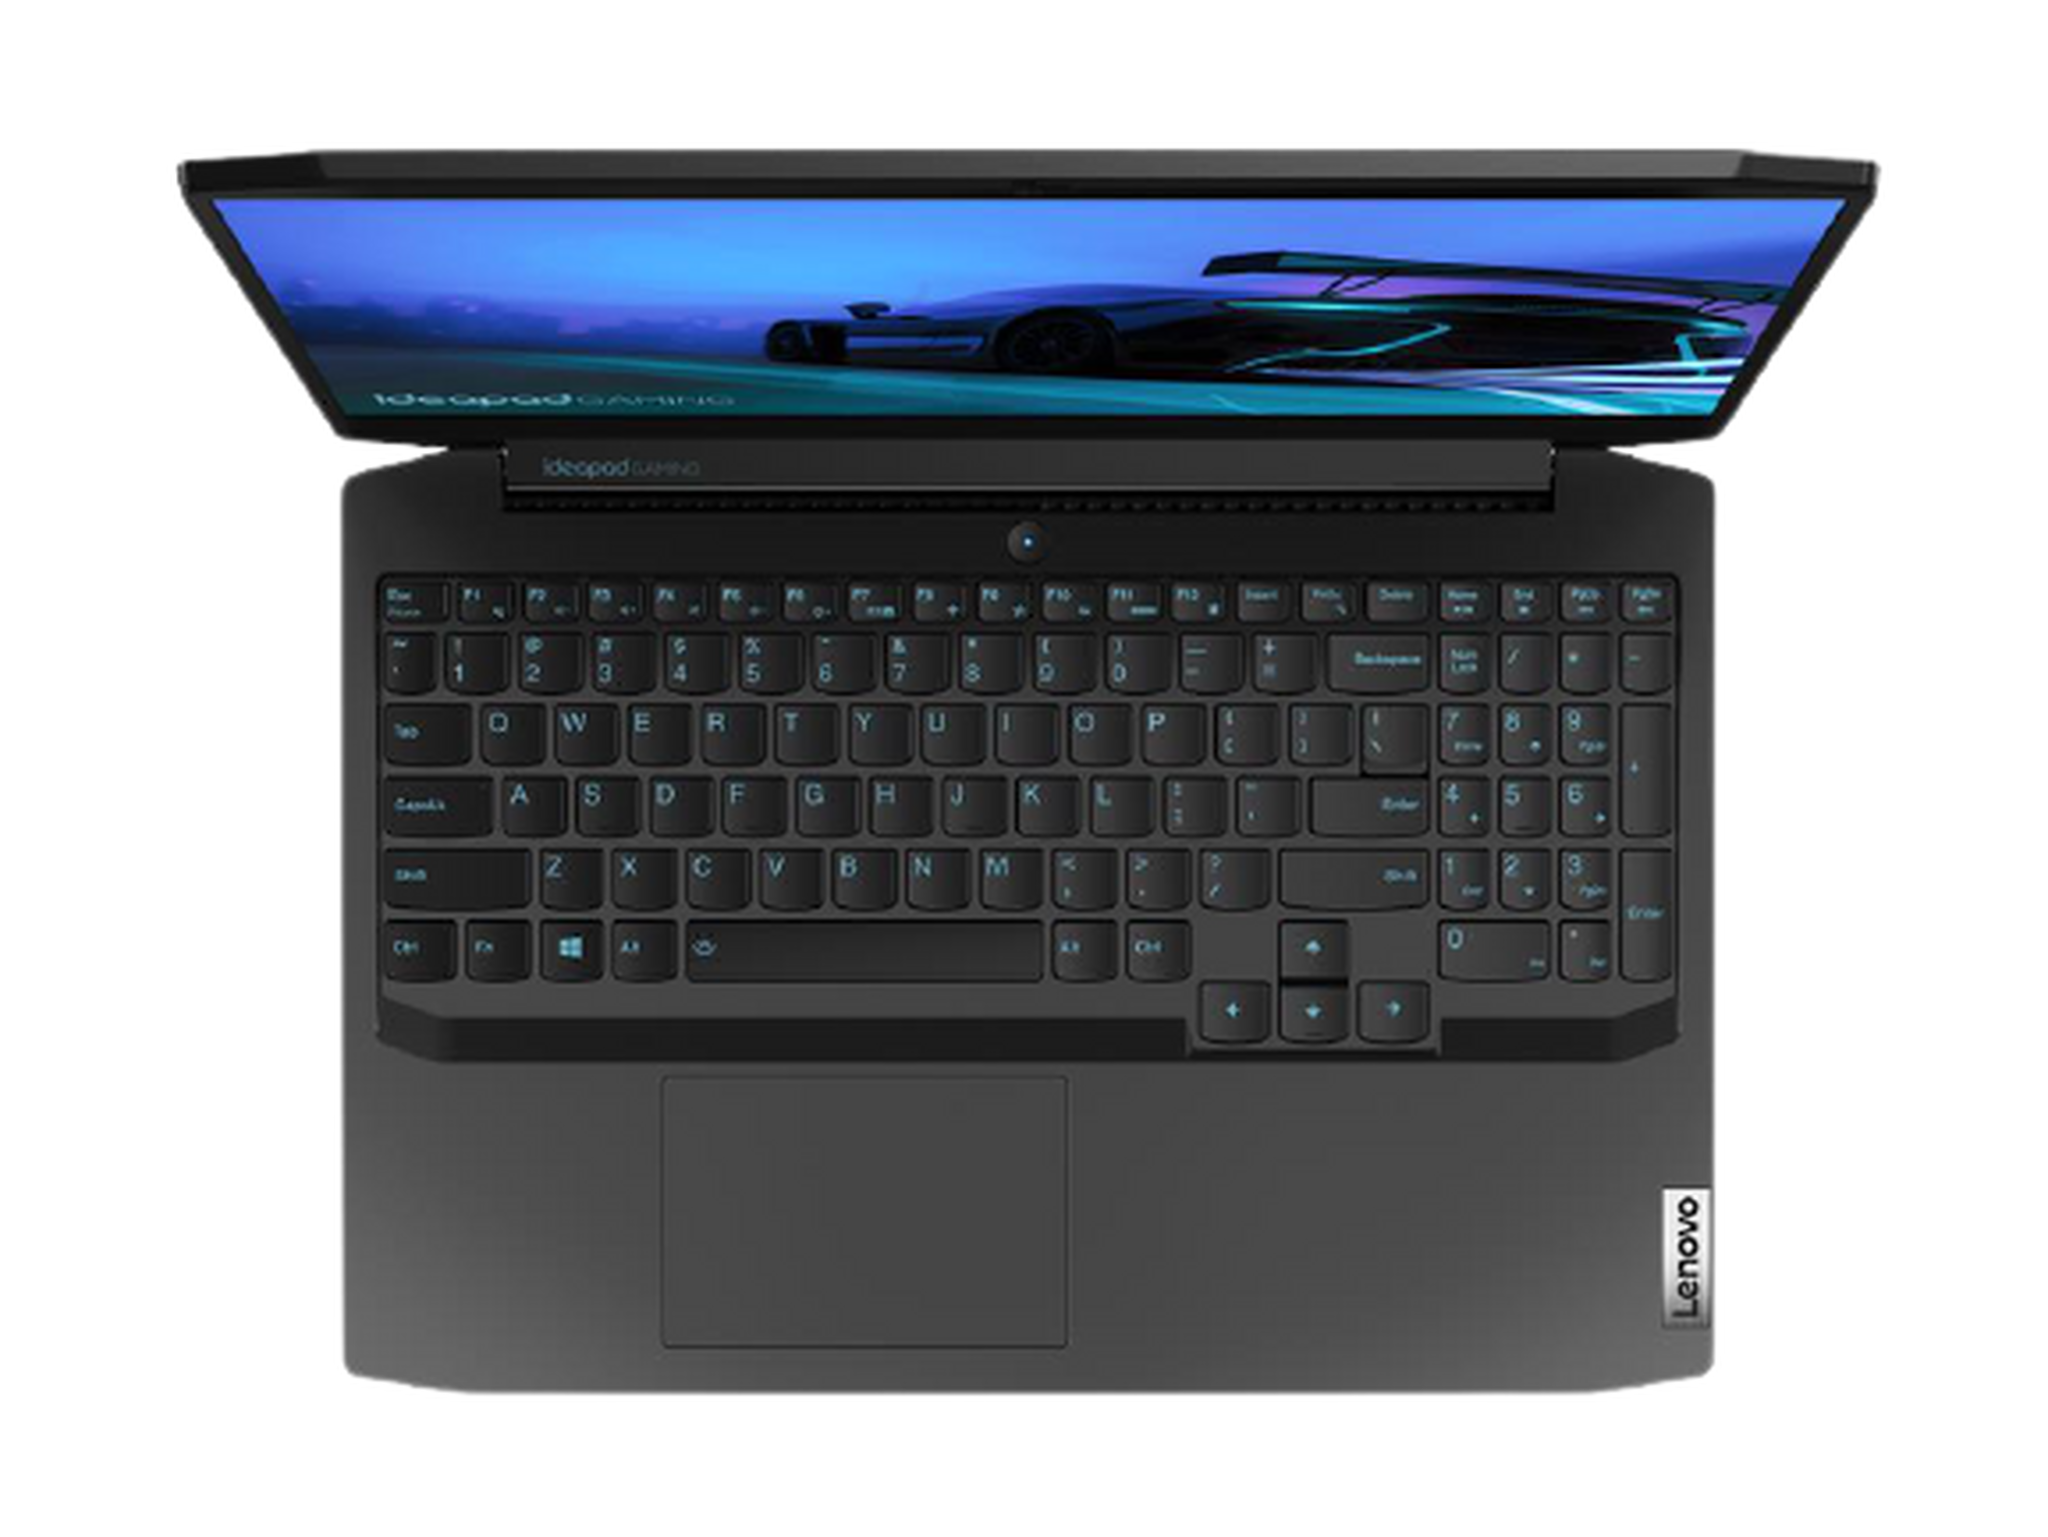 Lenovo IdeaPad Gaming 3,Intel Core i5, Nvidia Geforce GTX 1650 Ti 4GB, RAM 8GB, SSD 512GB, 15.6" FHD 60Hz Gaming Laptop - Onyx Black (15IMH05)